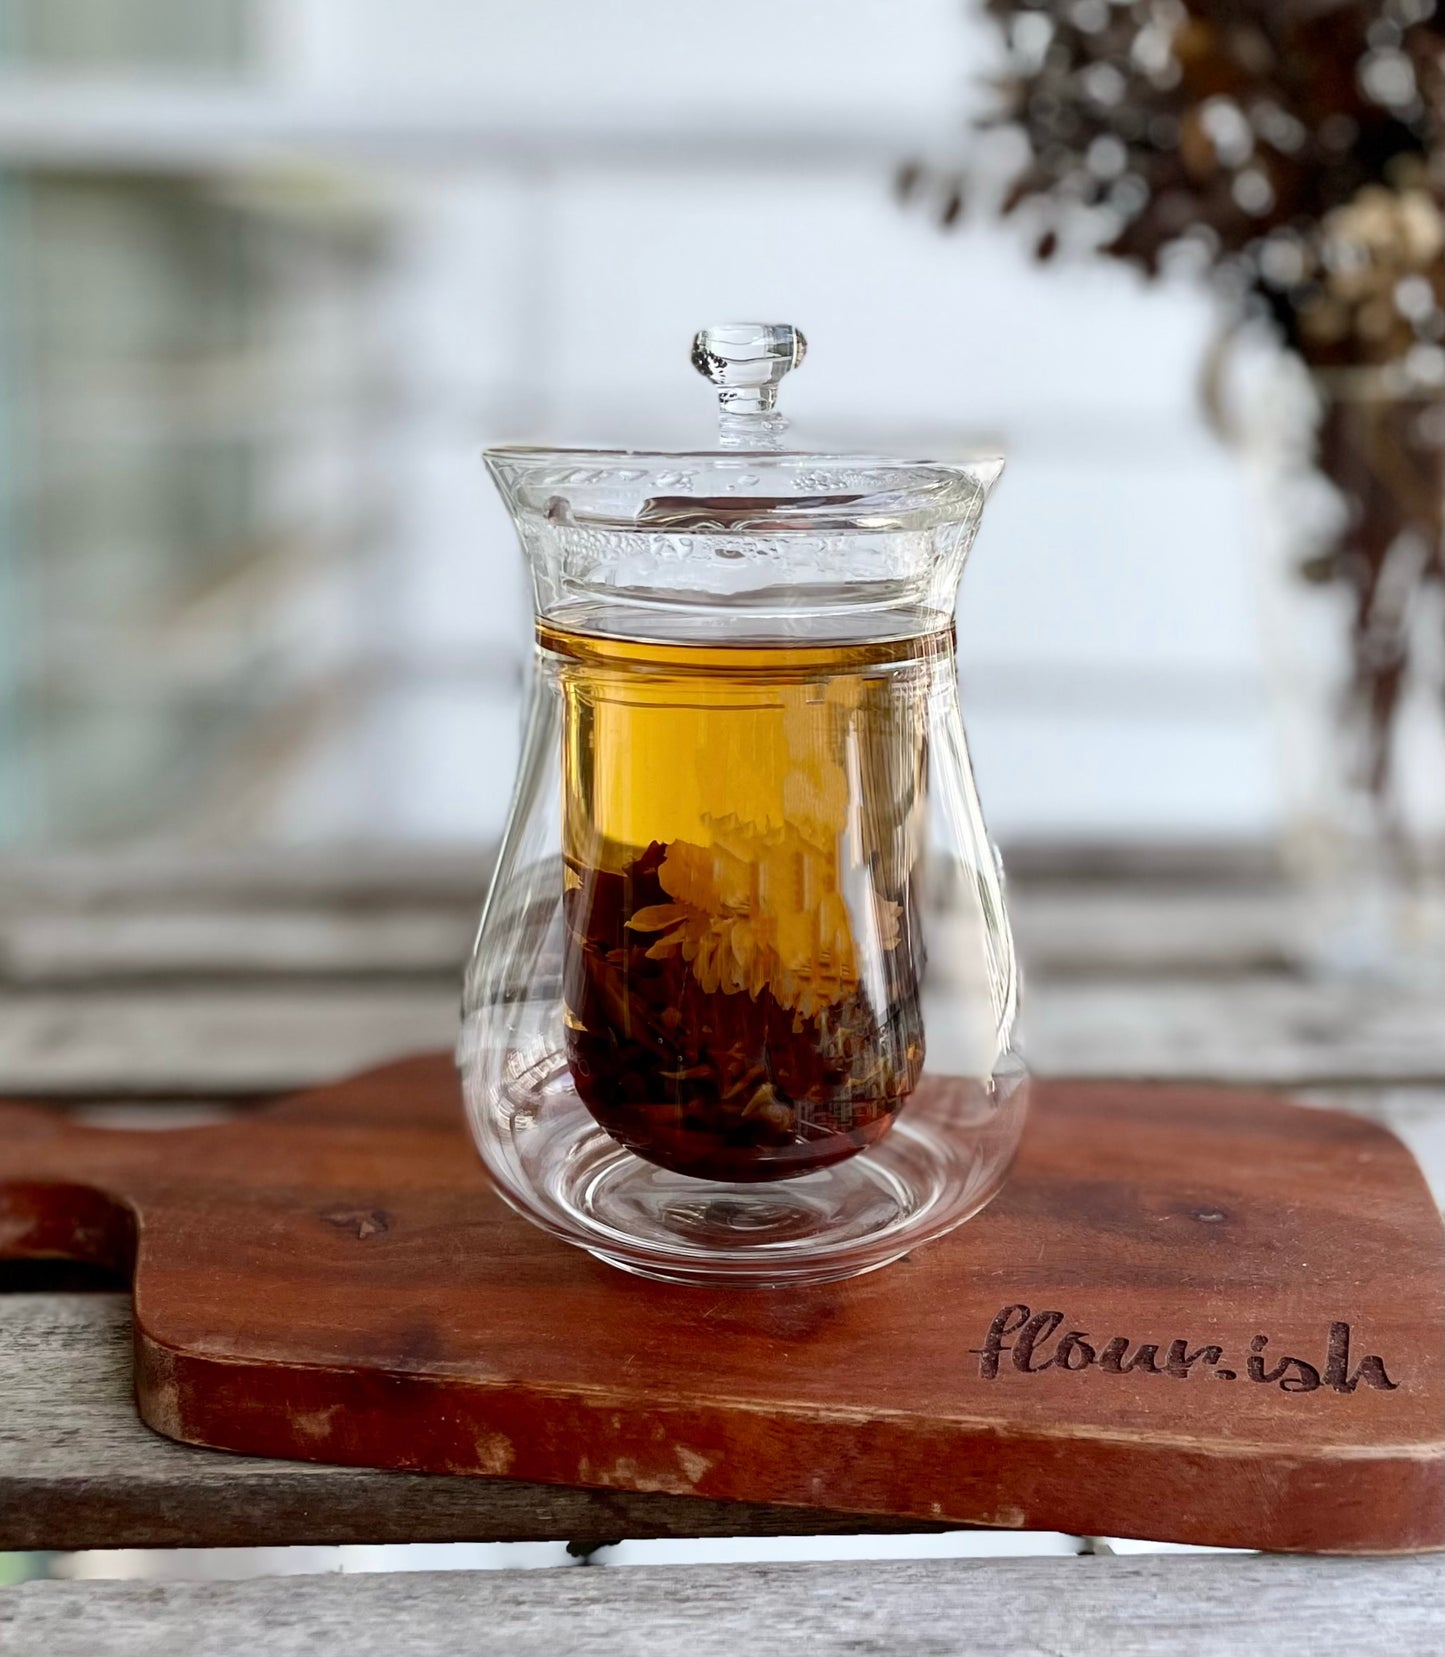 (Gift Box) 300ml Mini Double Wall Glass Coffee/Tea Carafe Set  w/ Coffee Fliter